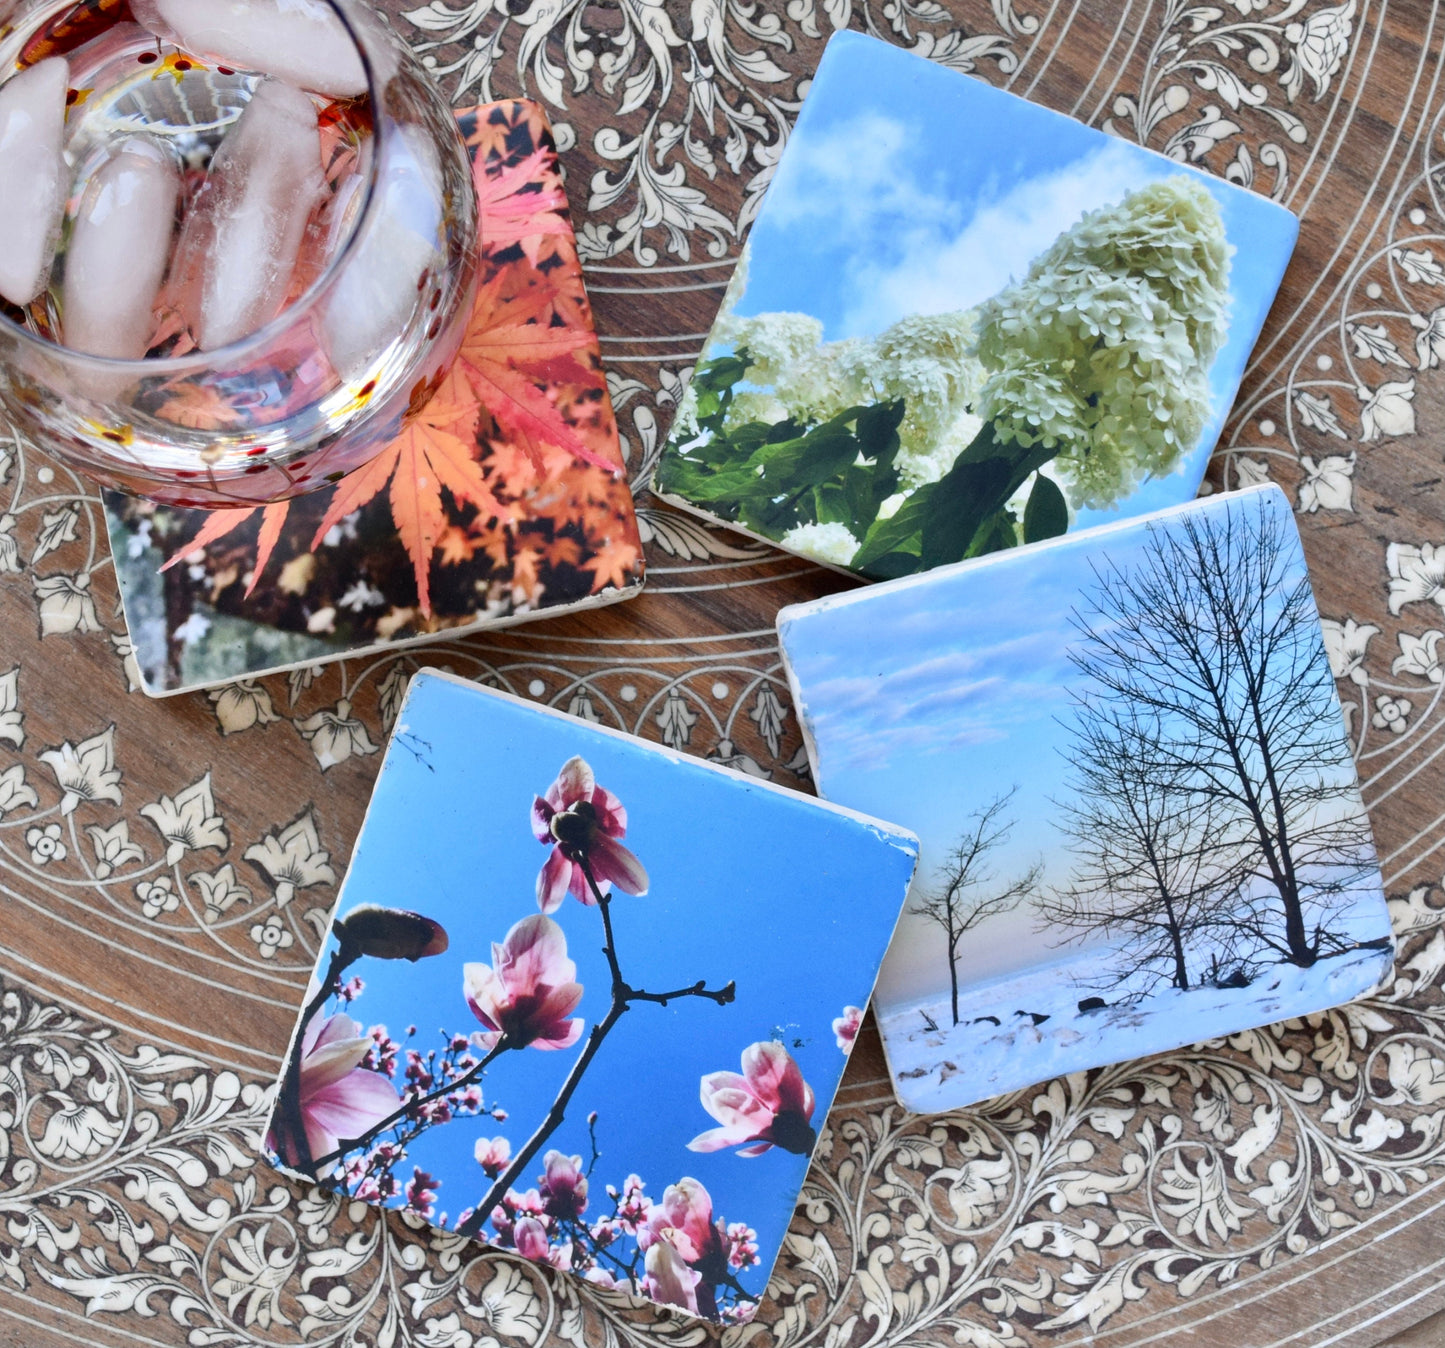 Seasonal Stone Coasters - Spring, Summer, Fall, Winter Coaster Set